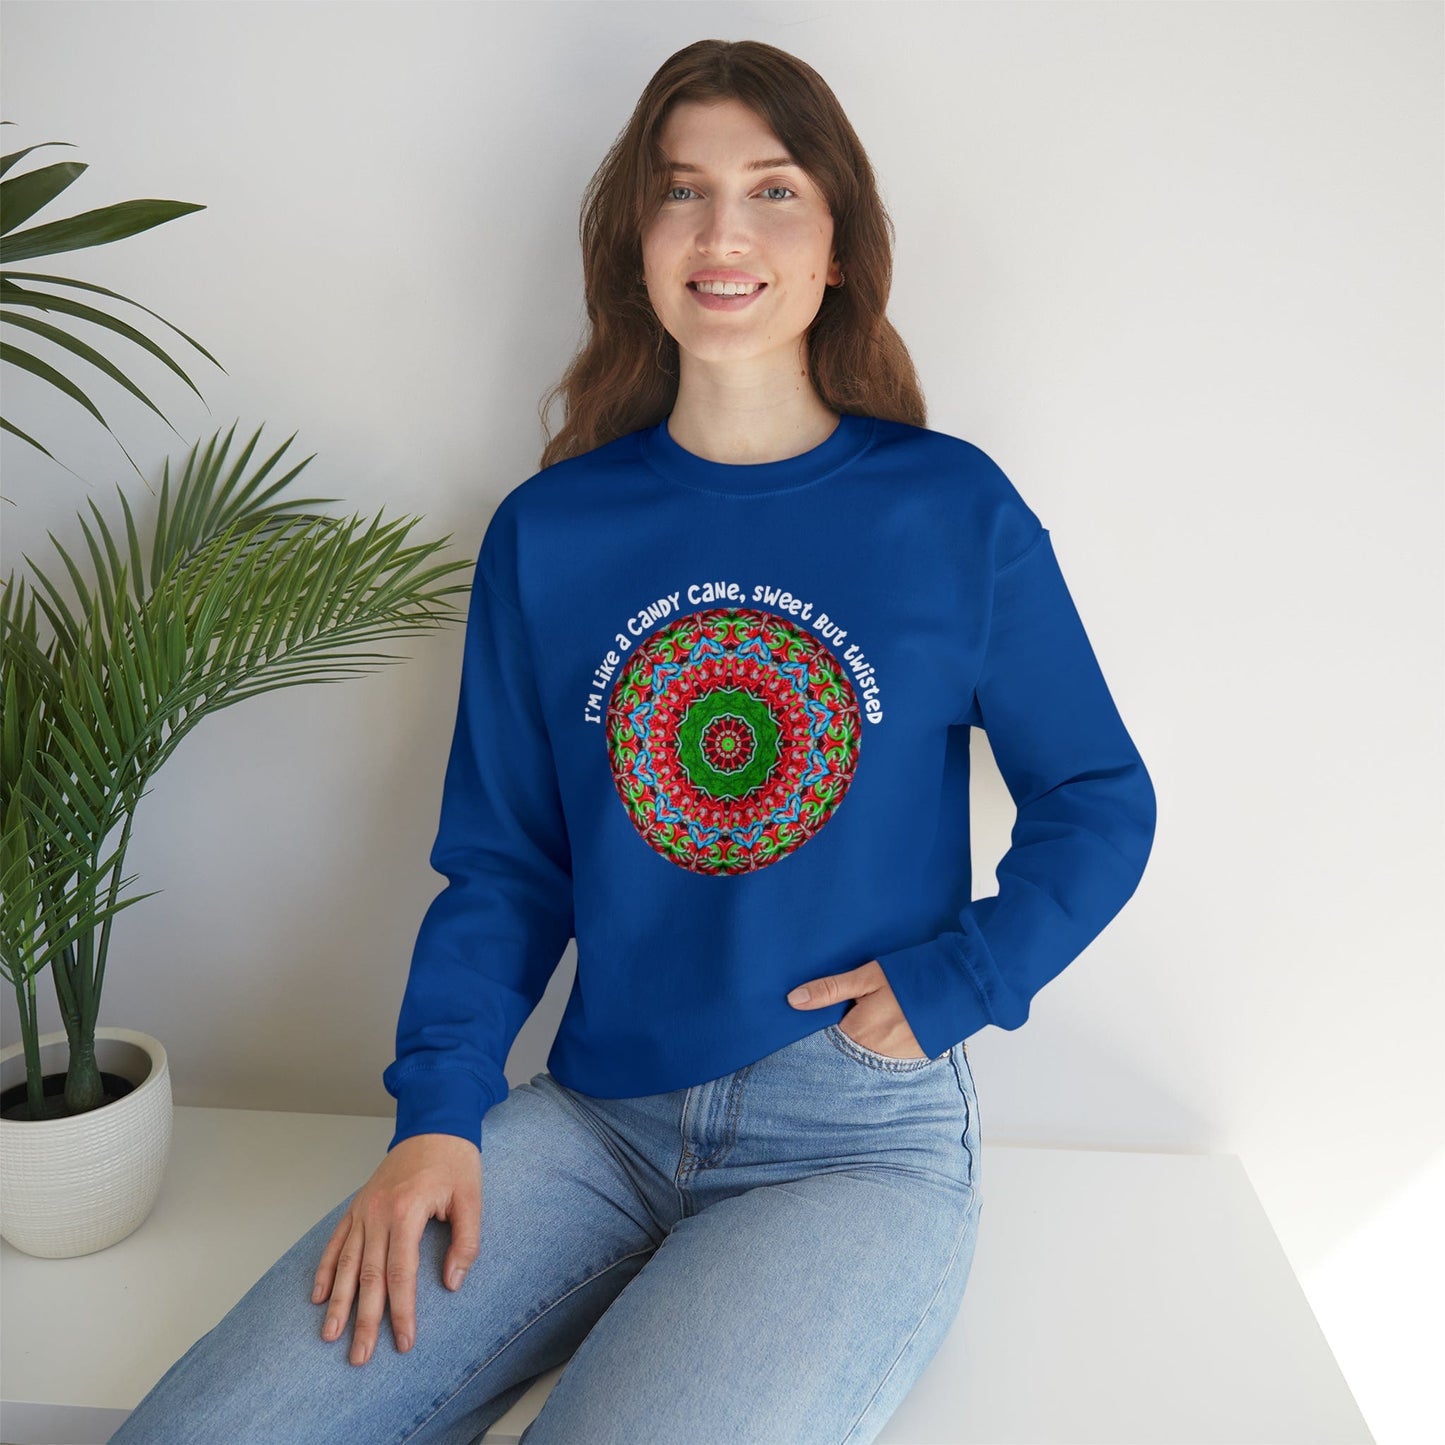 Cute & Funny Christmas Sweatshirt, Sarcastic Candy Cane Mandala Art Shirt, Im like a candy cane sweet but twisted ROYAL BLUE